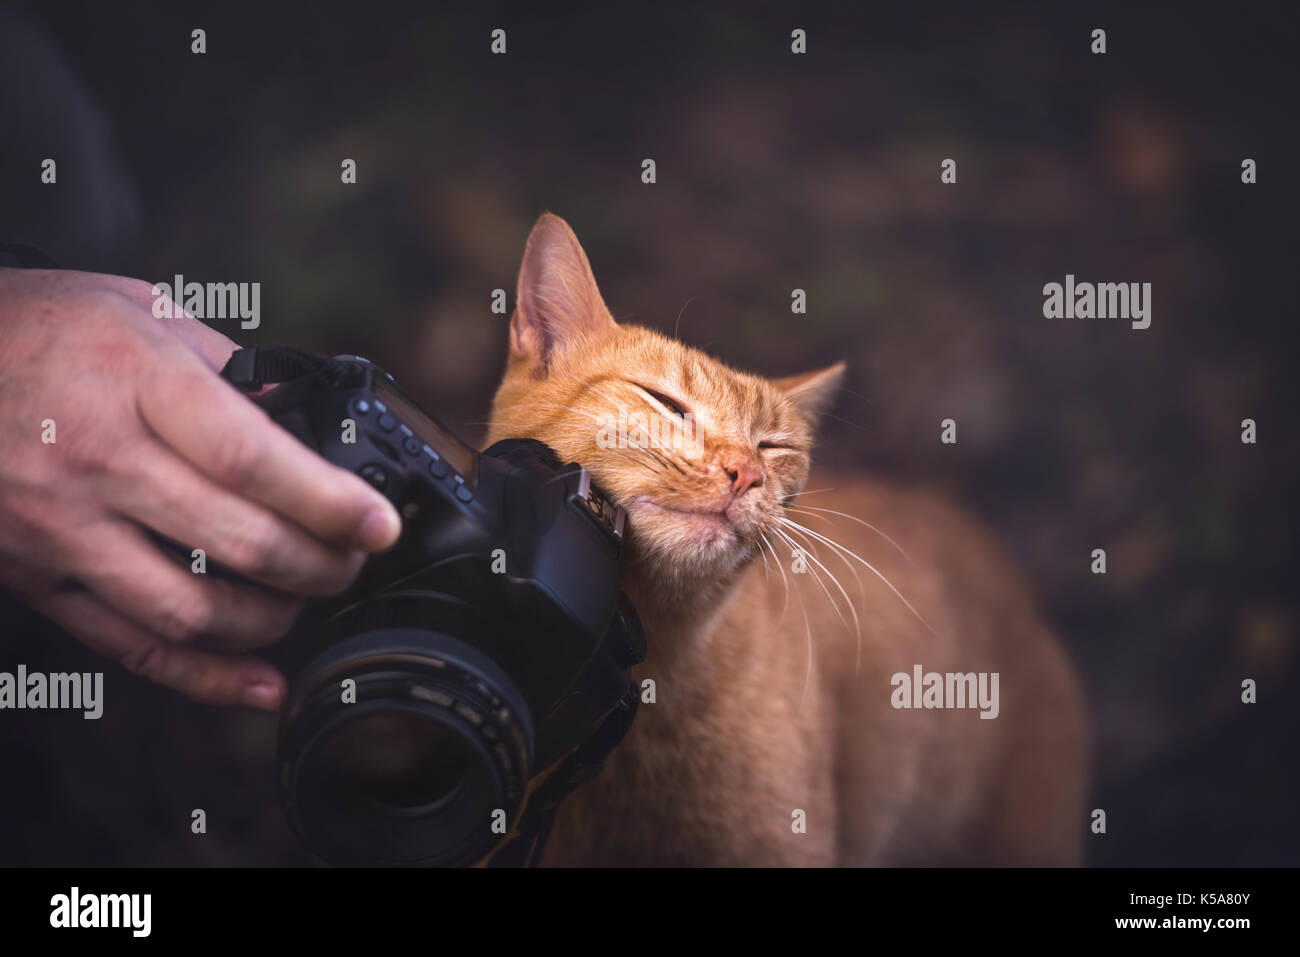 Cat rubbing on camera lens. Stock Photo